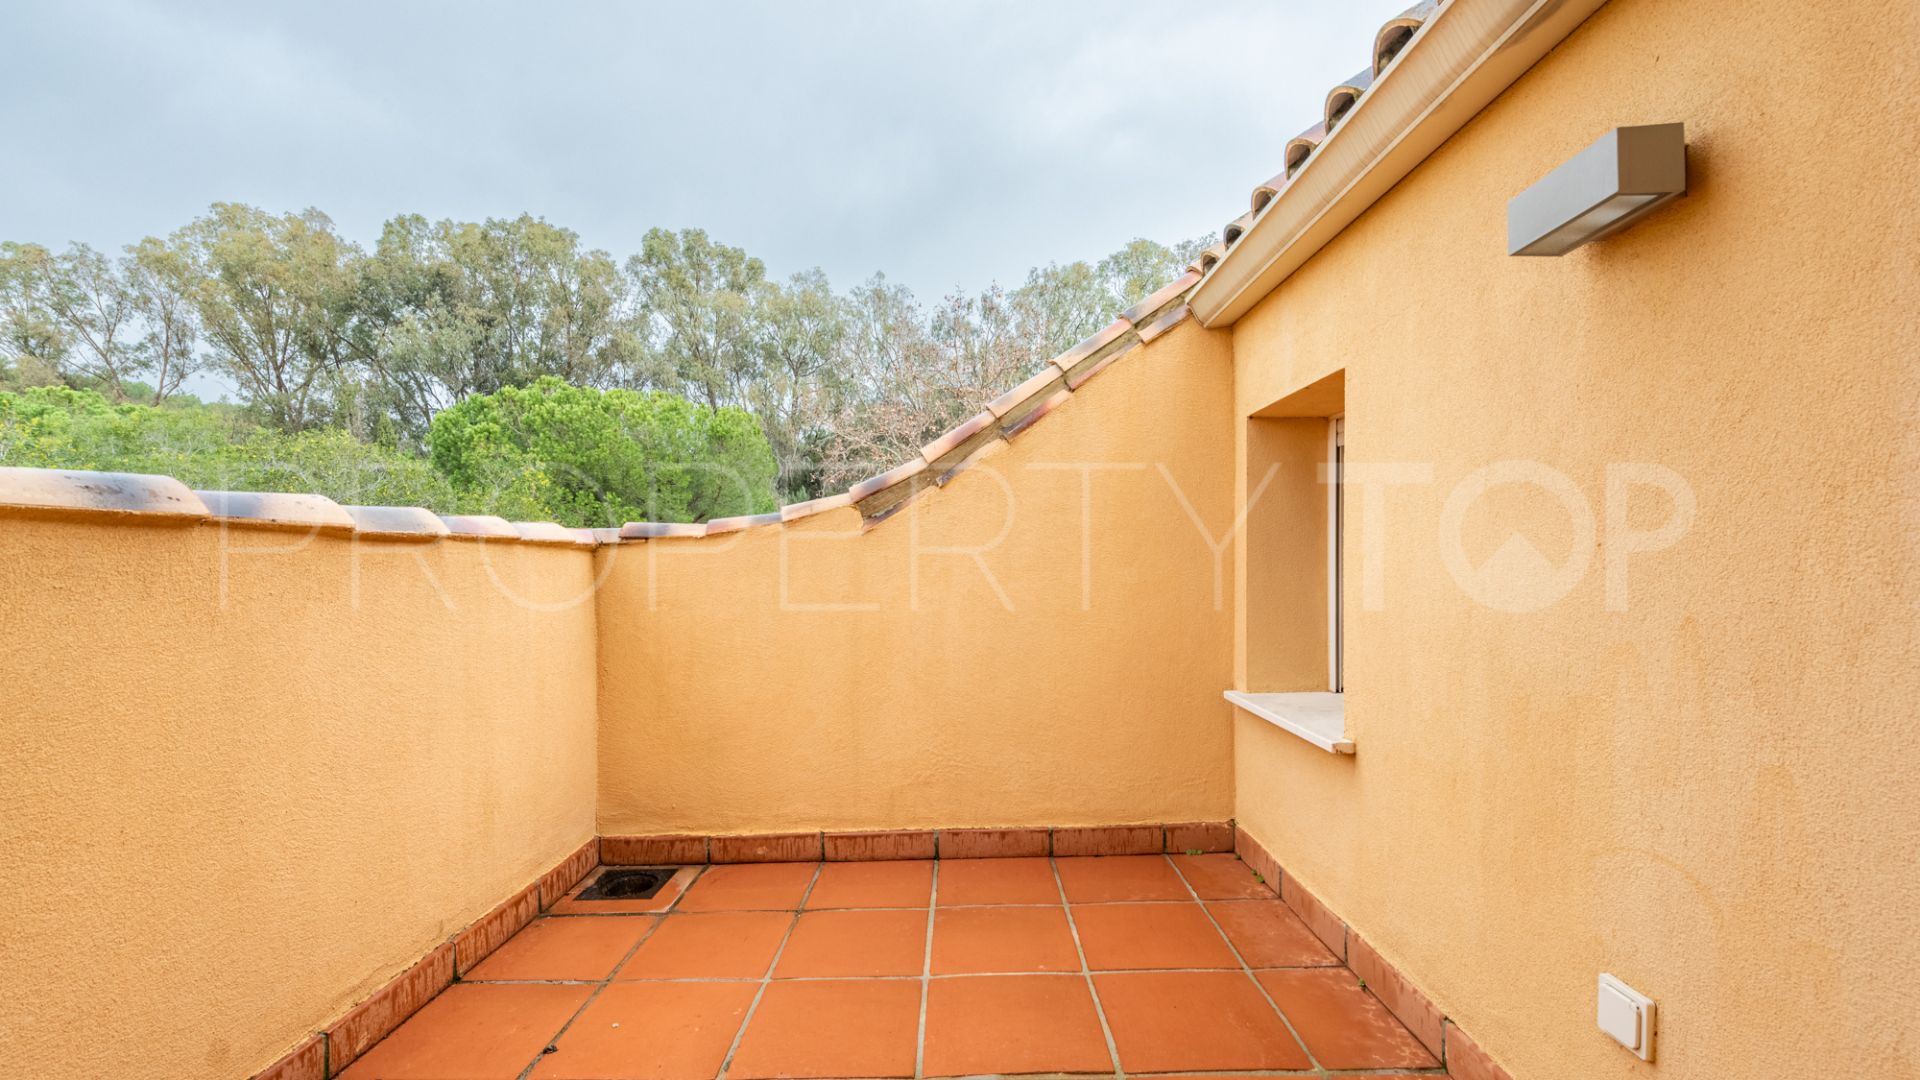 4 bedrooms duplex penthouse in El Mirador for sale